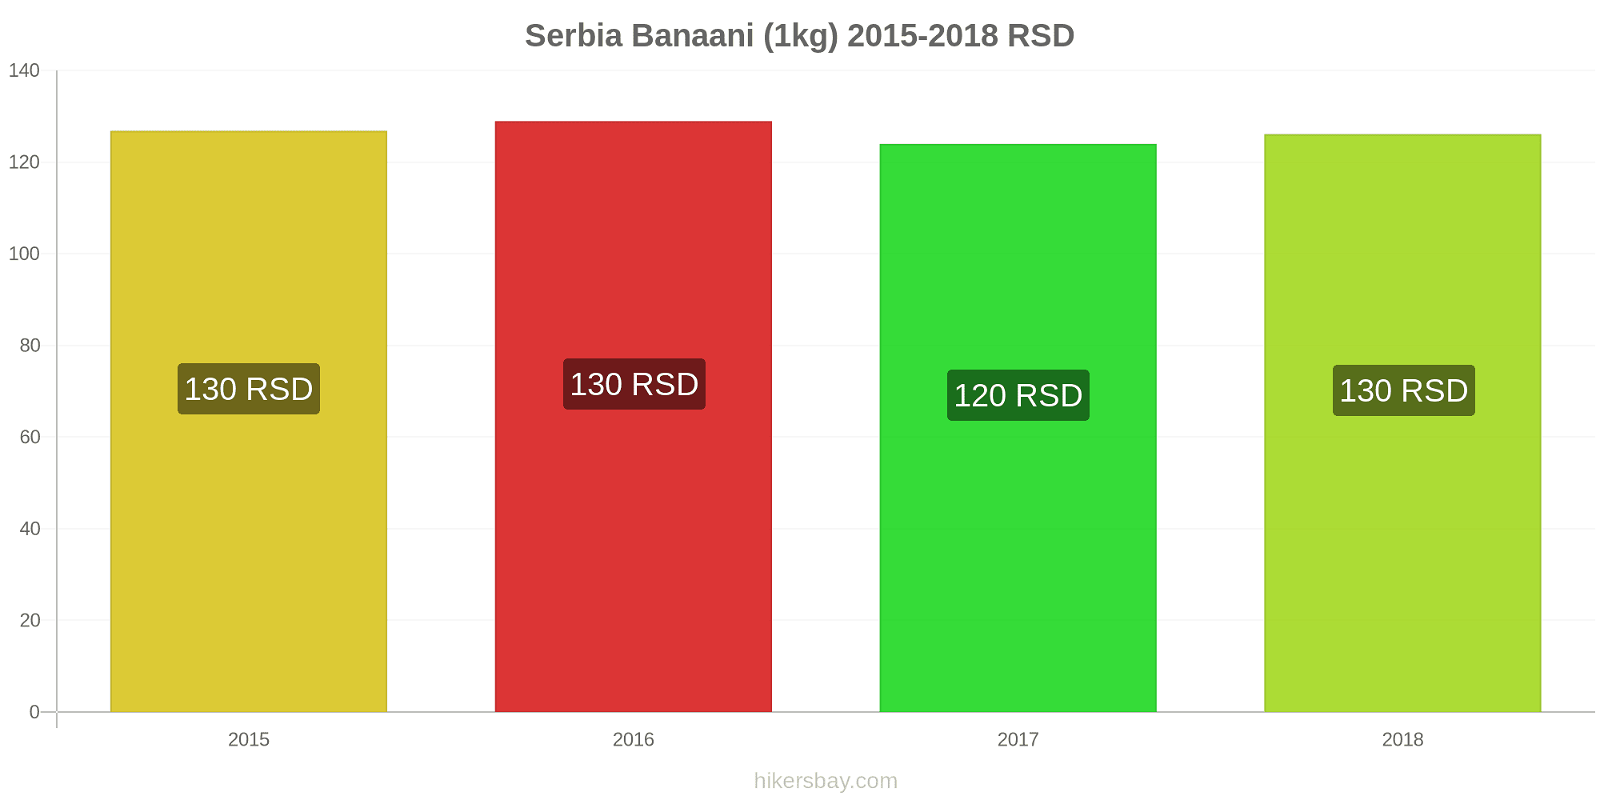 Serbia hintojen muutokset Banaani (1kg) hikersbay.com